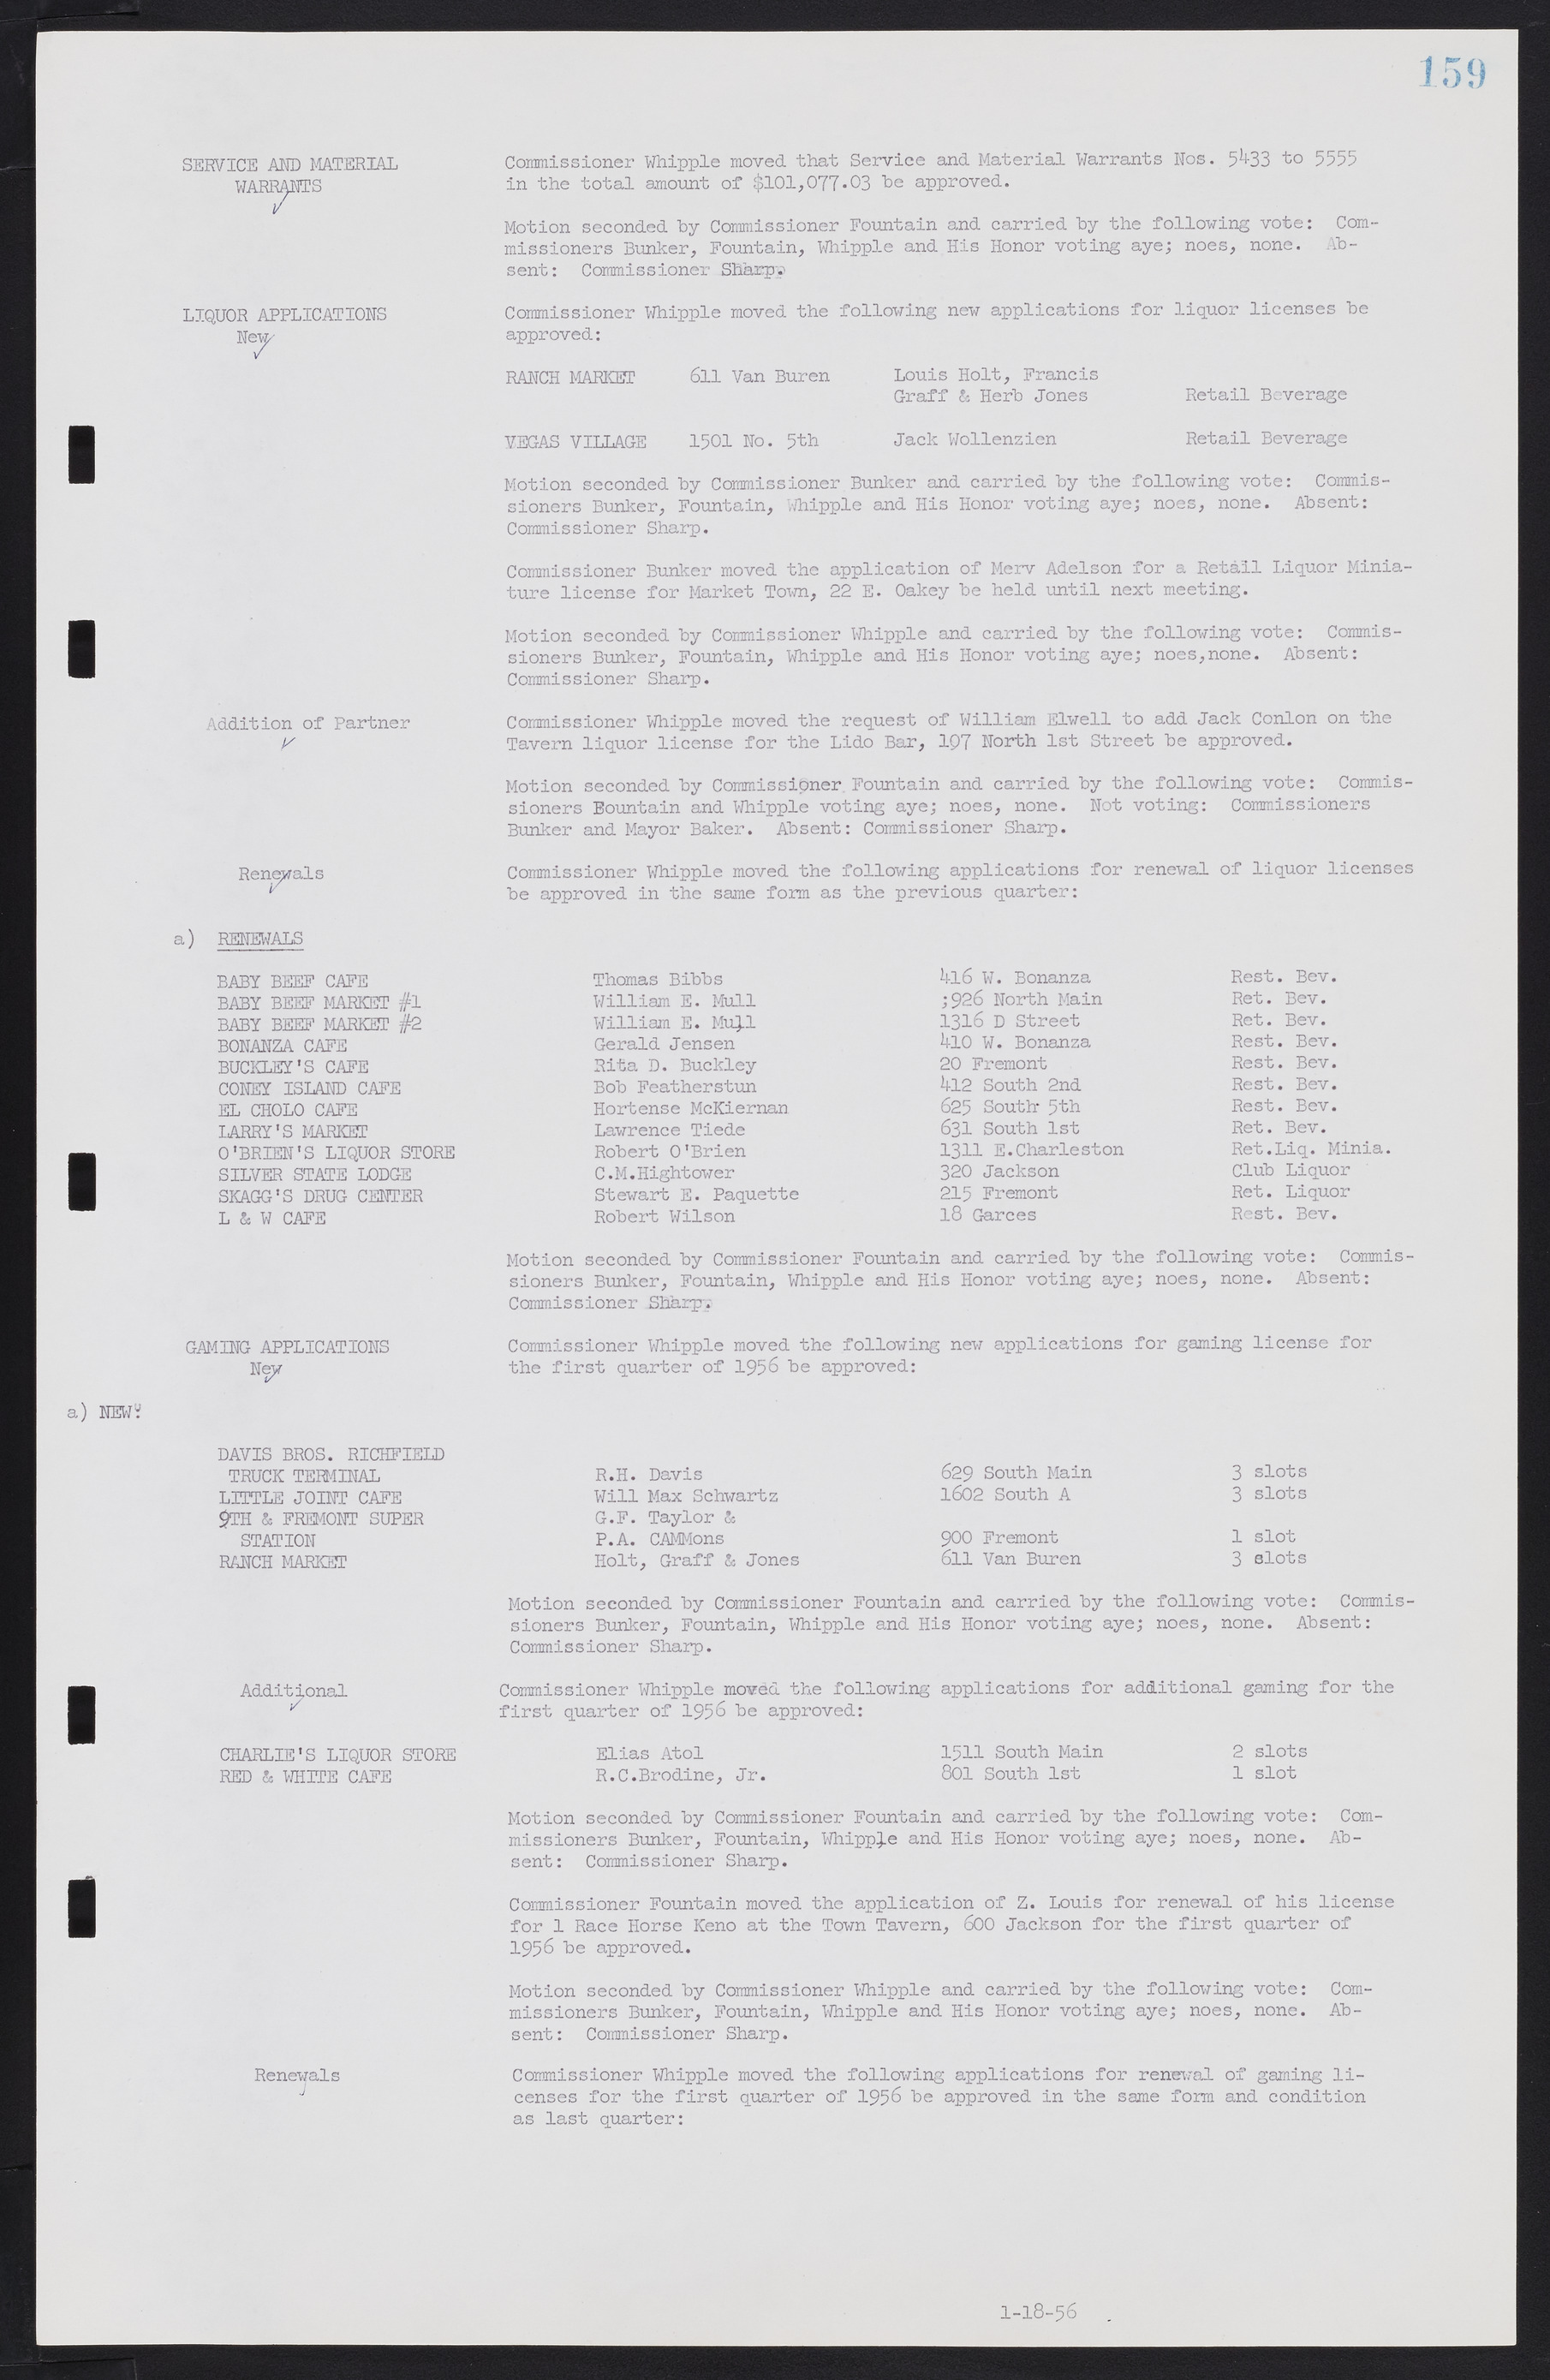 Las Vegas City Commission Minutes, September 21, 1955 to November 20, 1957, lvc000010-173